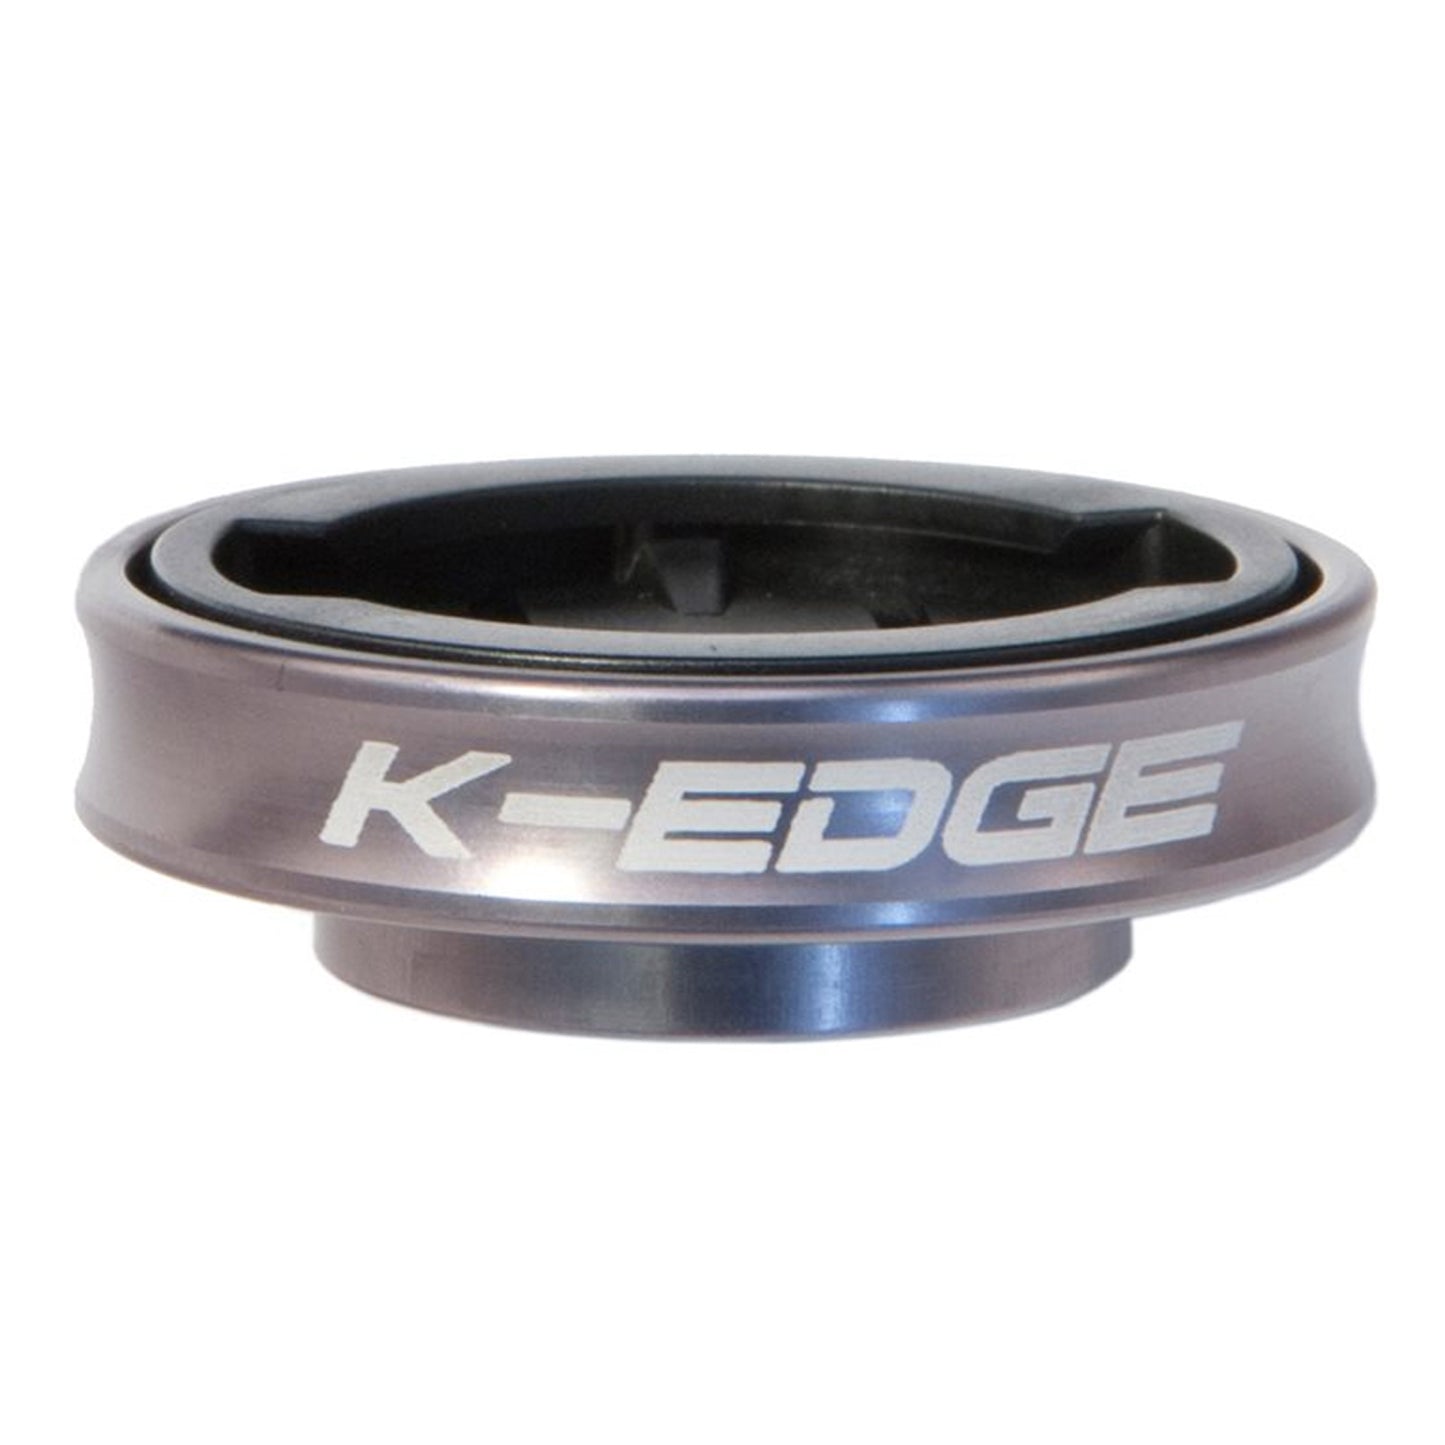 K-Edge Gravity Cap Garmin Mount